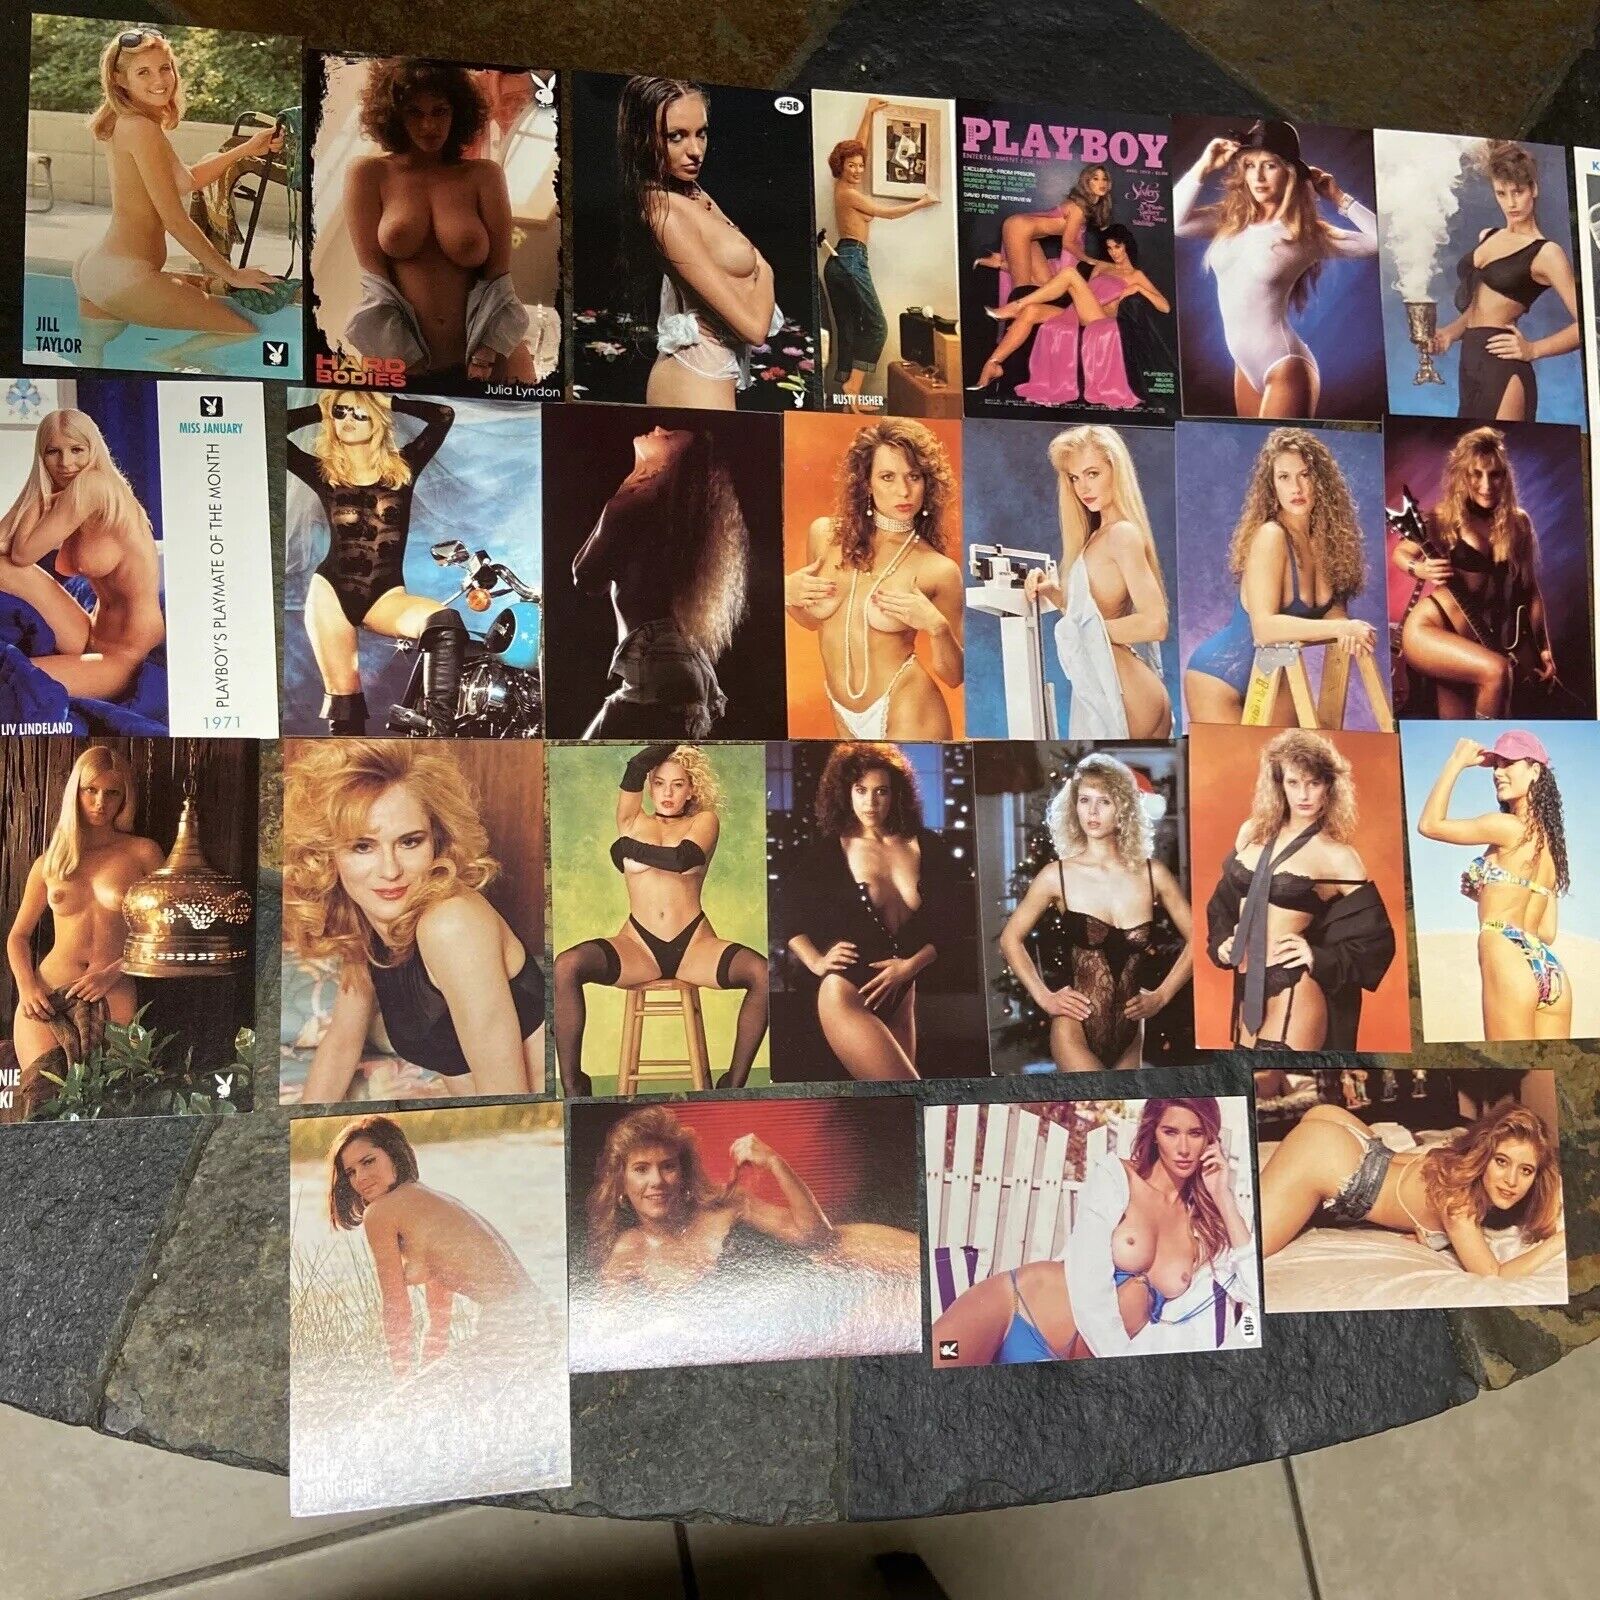 Lot of 28 Adult Trading Cards Playboy Nudes, Fantasy Girls, Bikini Models